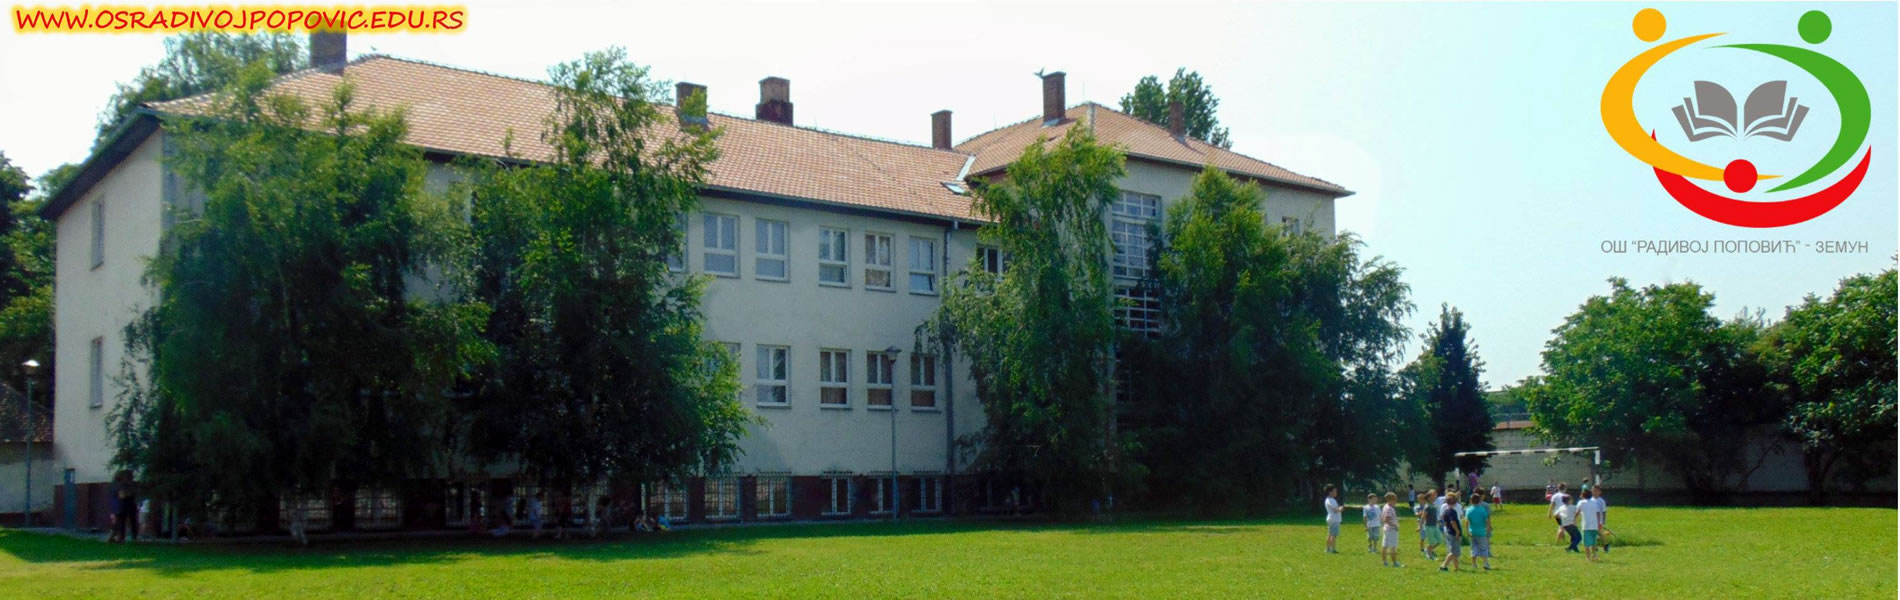 Osnovna škola Radivoj Popović Beograd